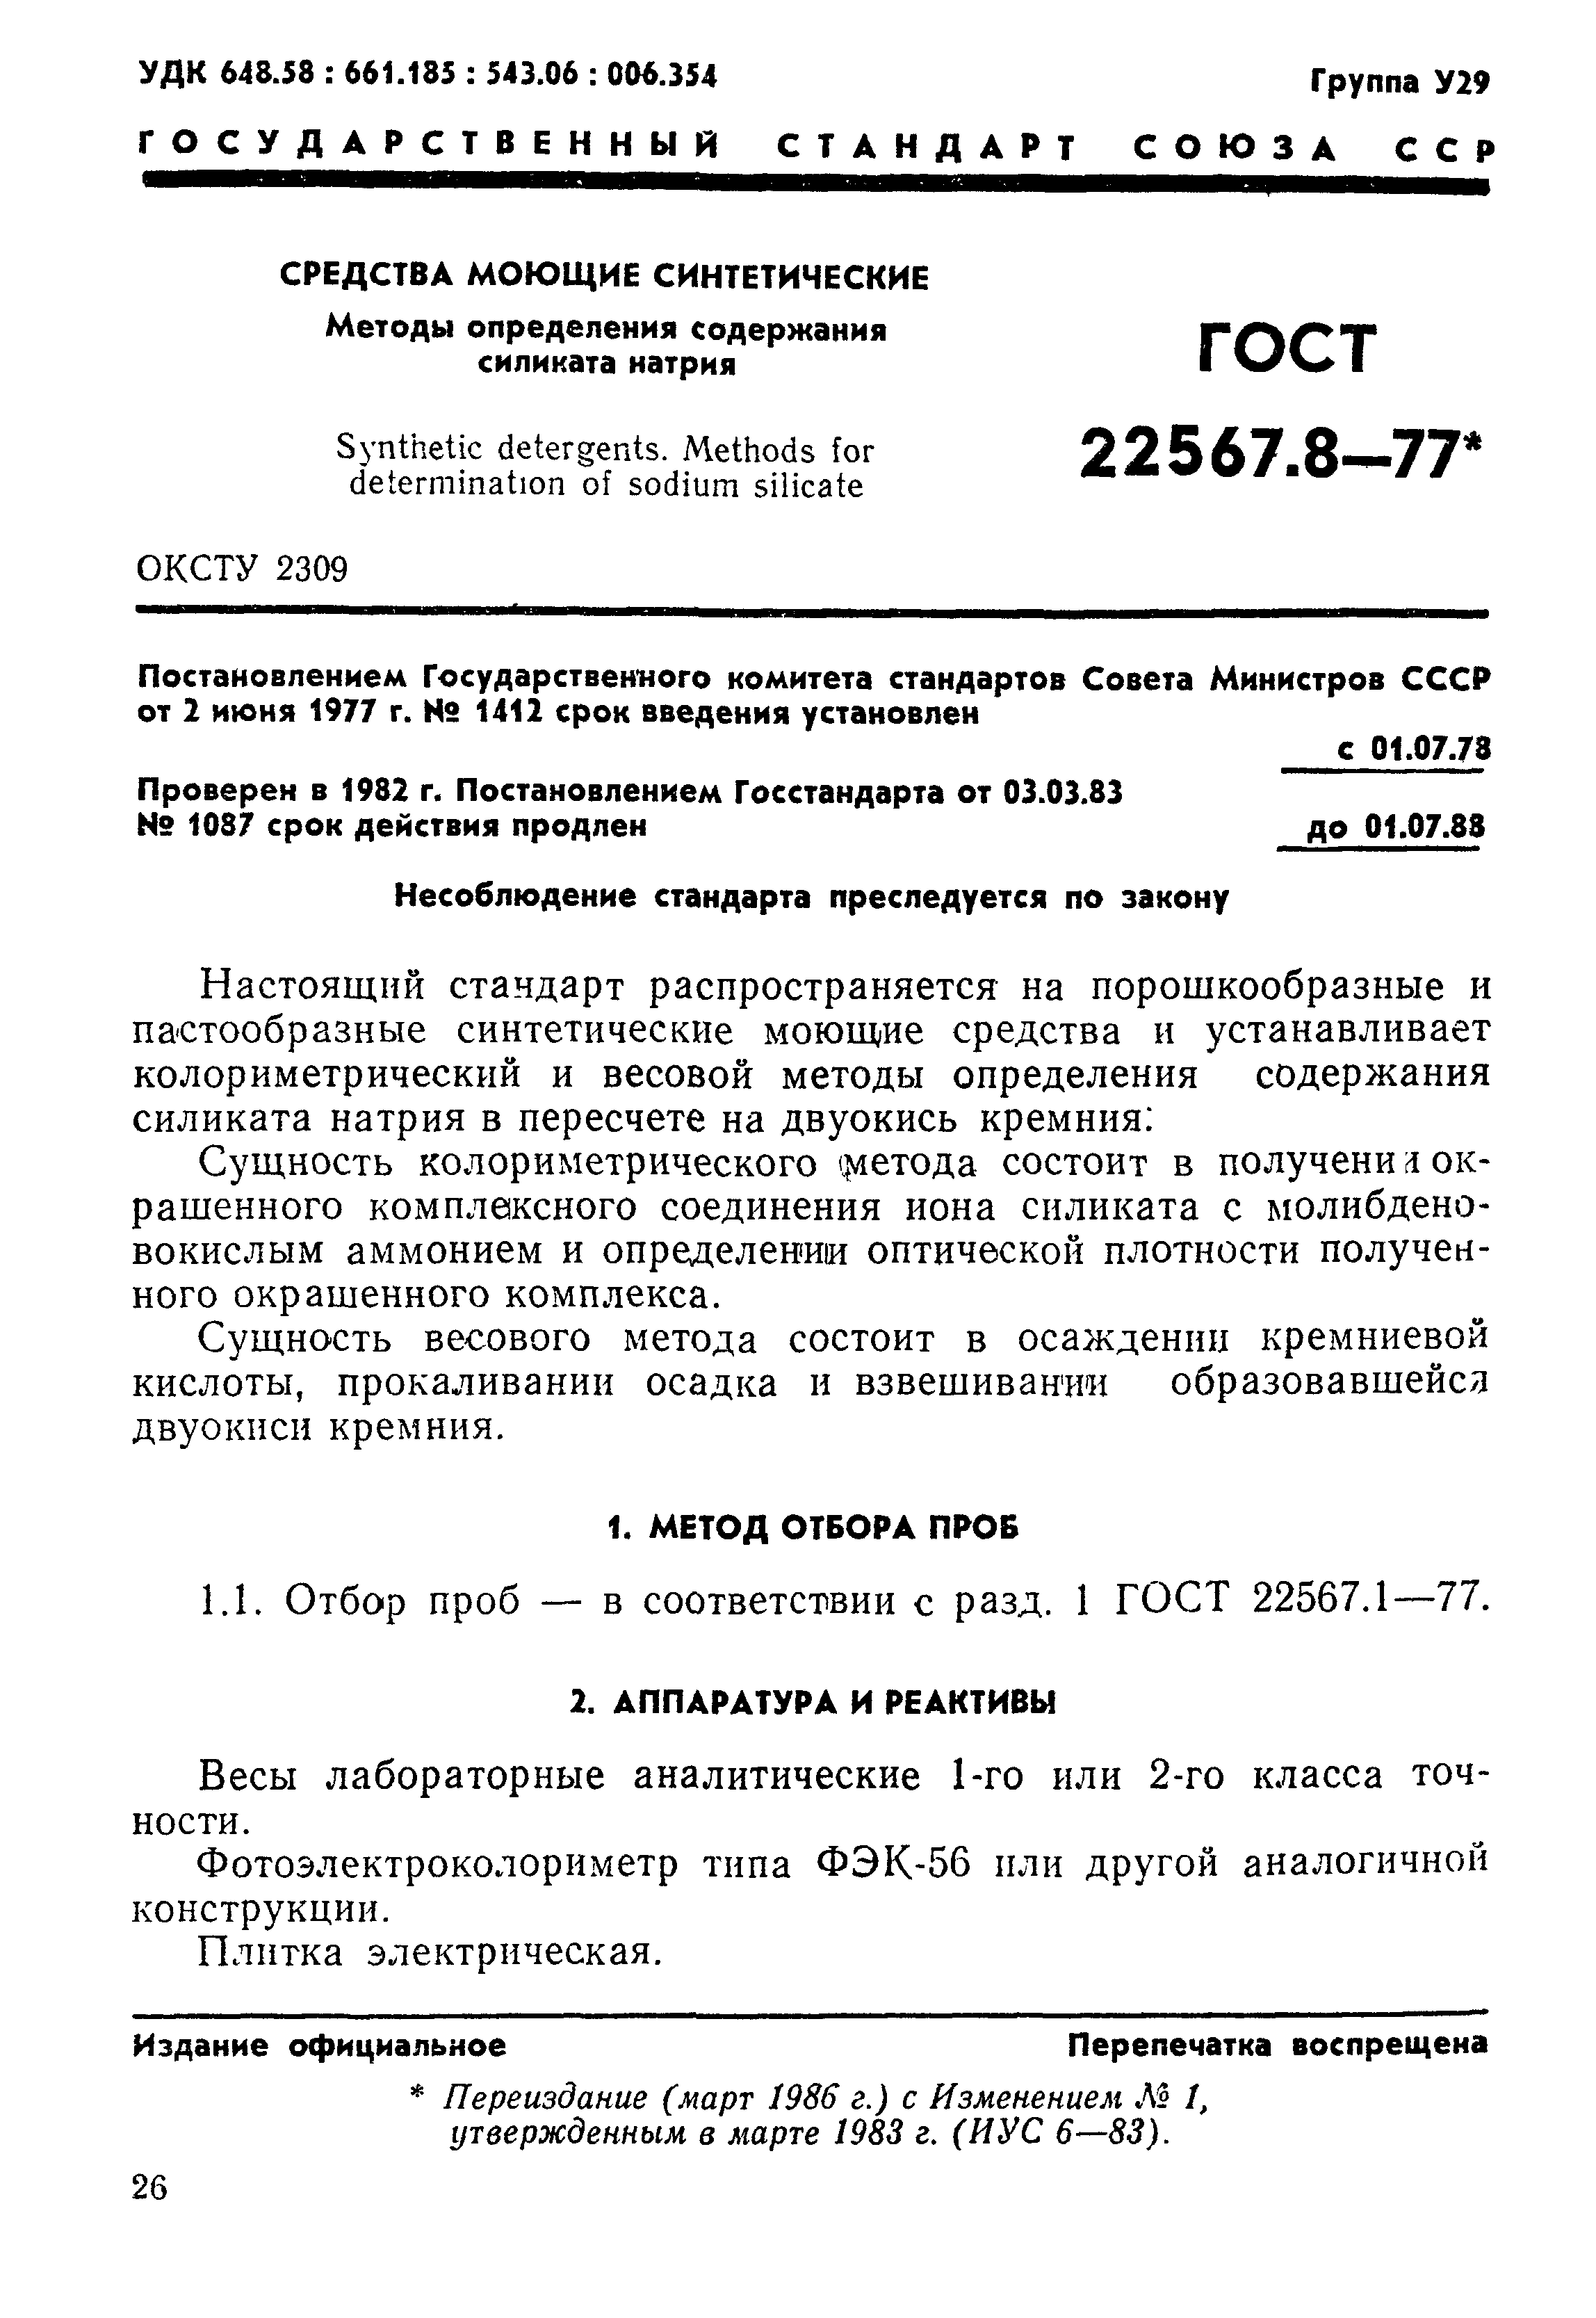 ГОСТ 22567.8-77